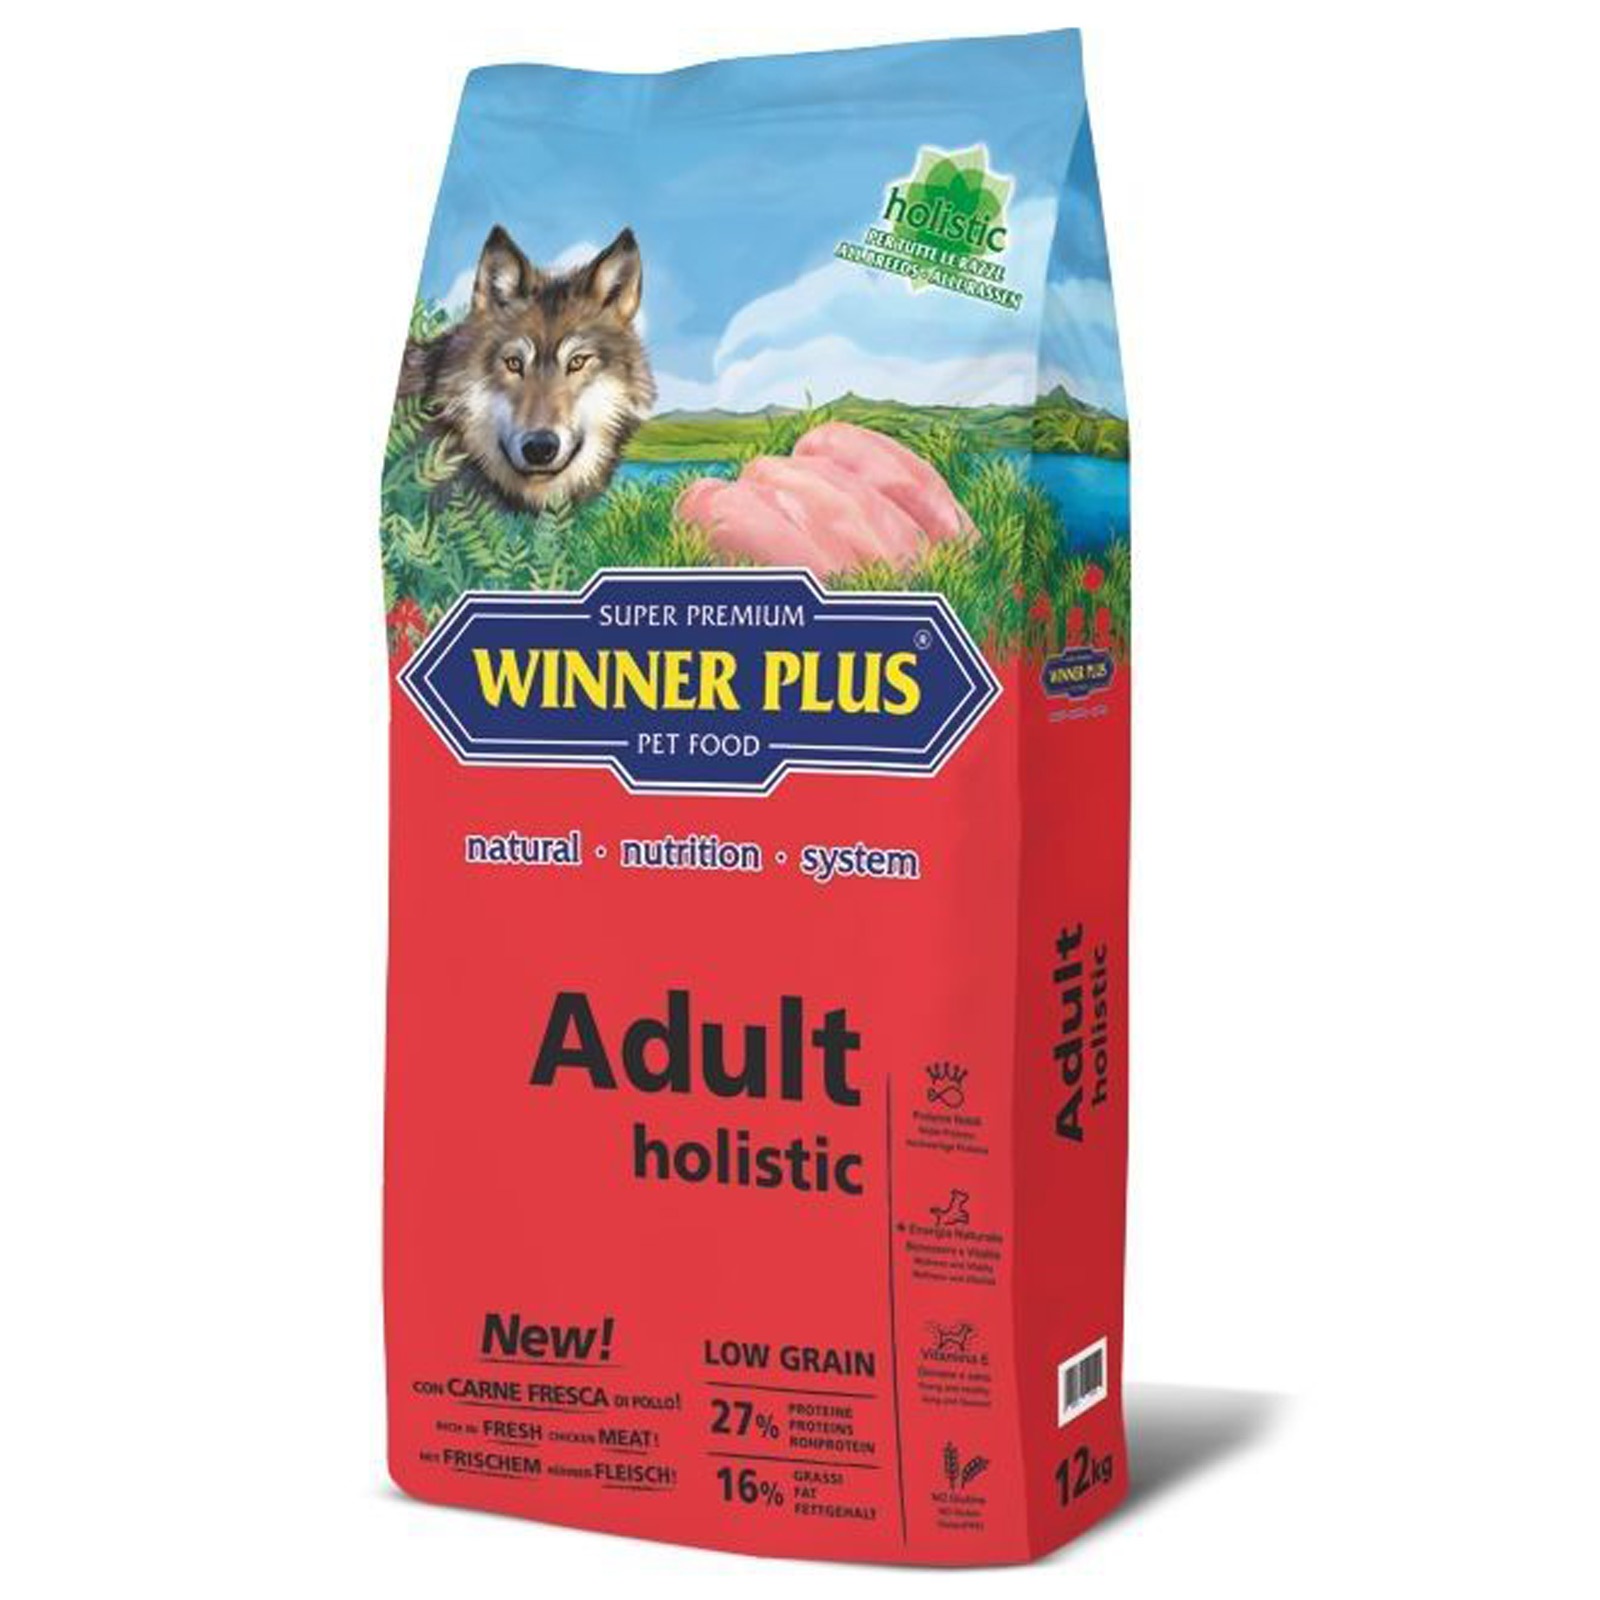 Winner Plus Holistic Adult Hundfoder